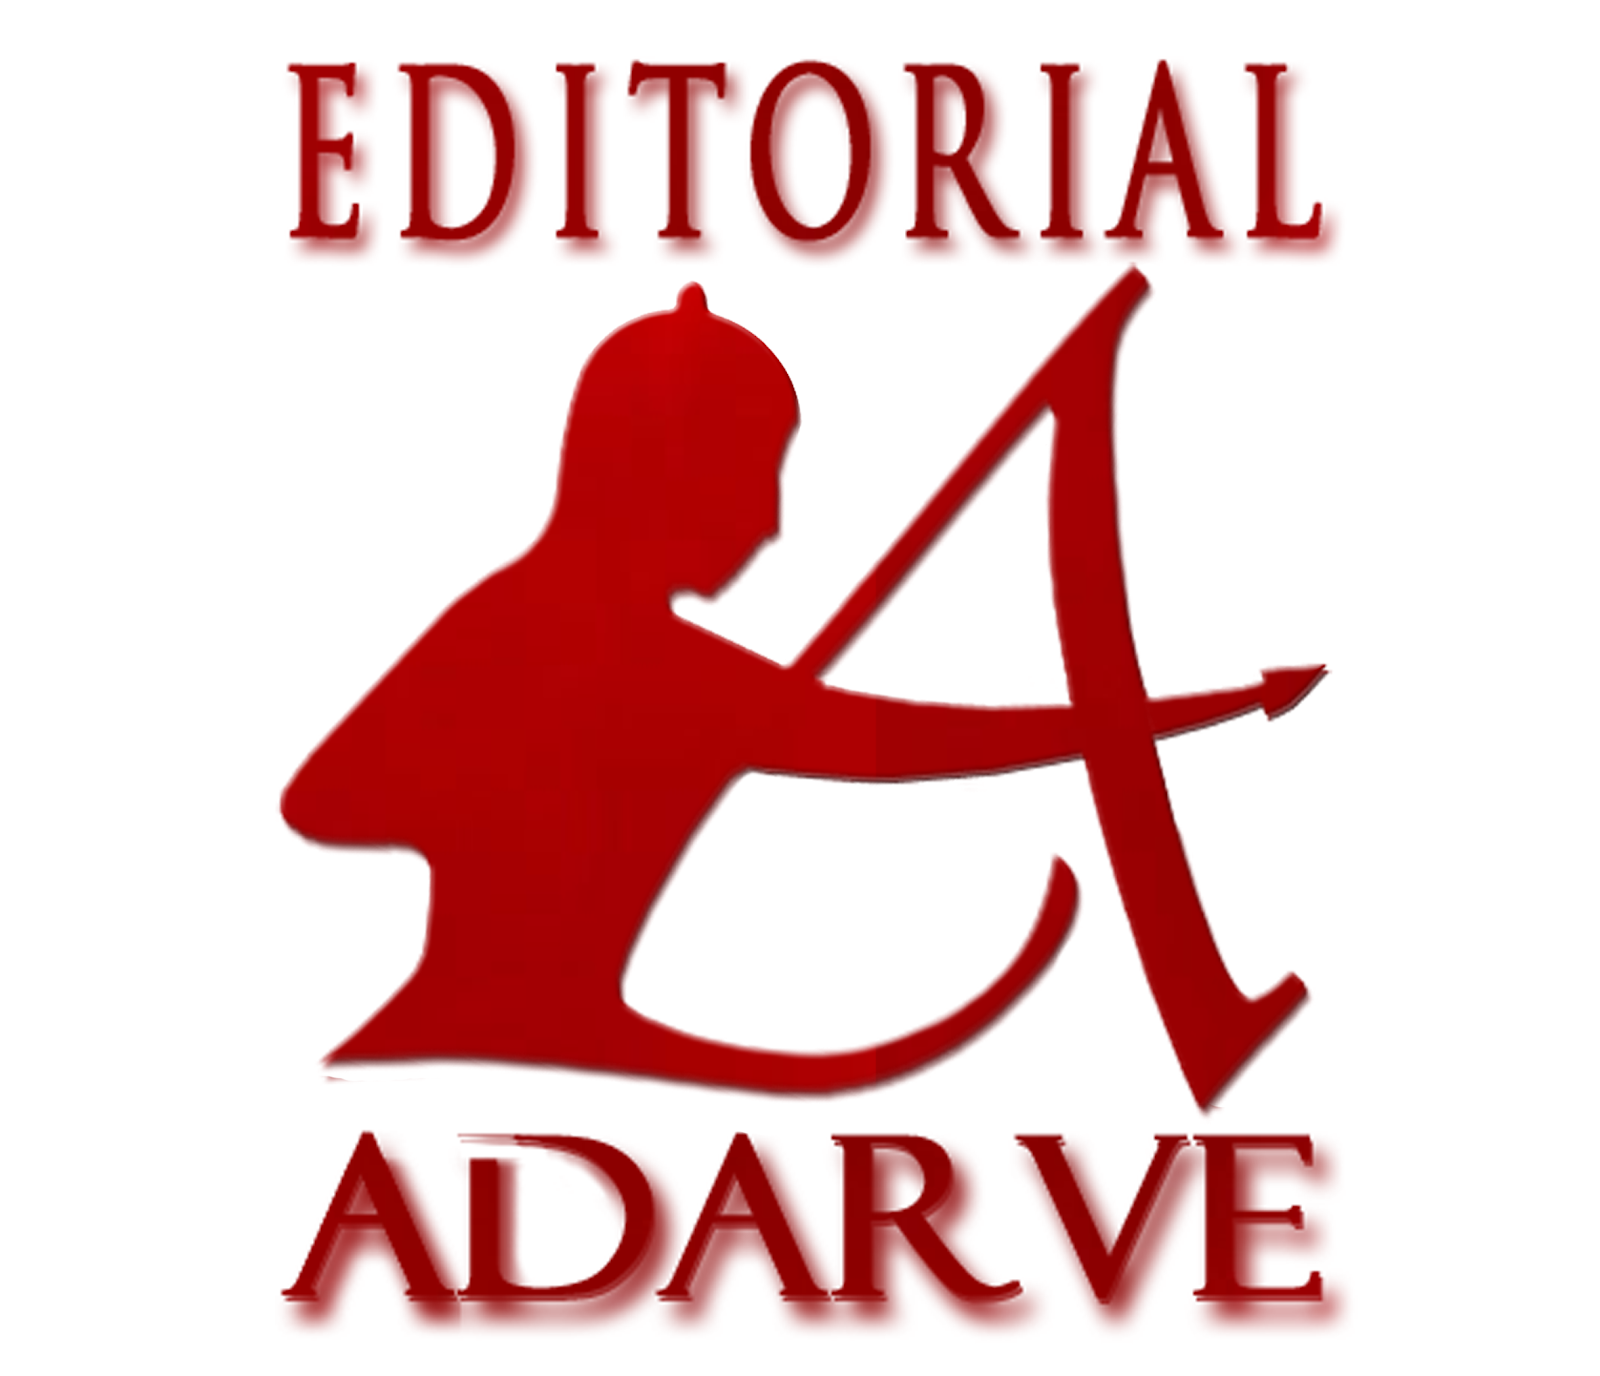 Editorial adarve